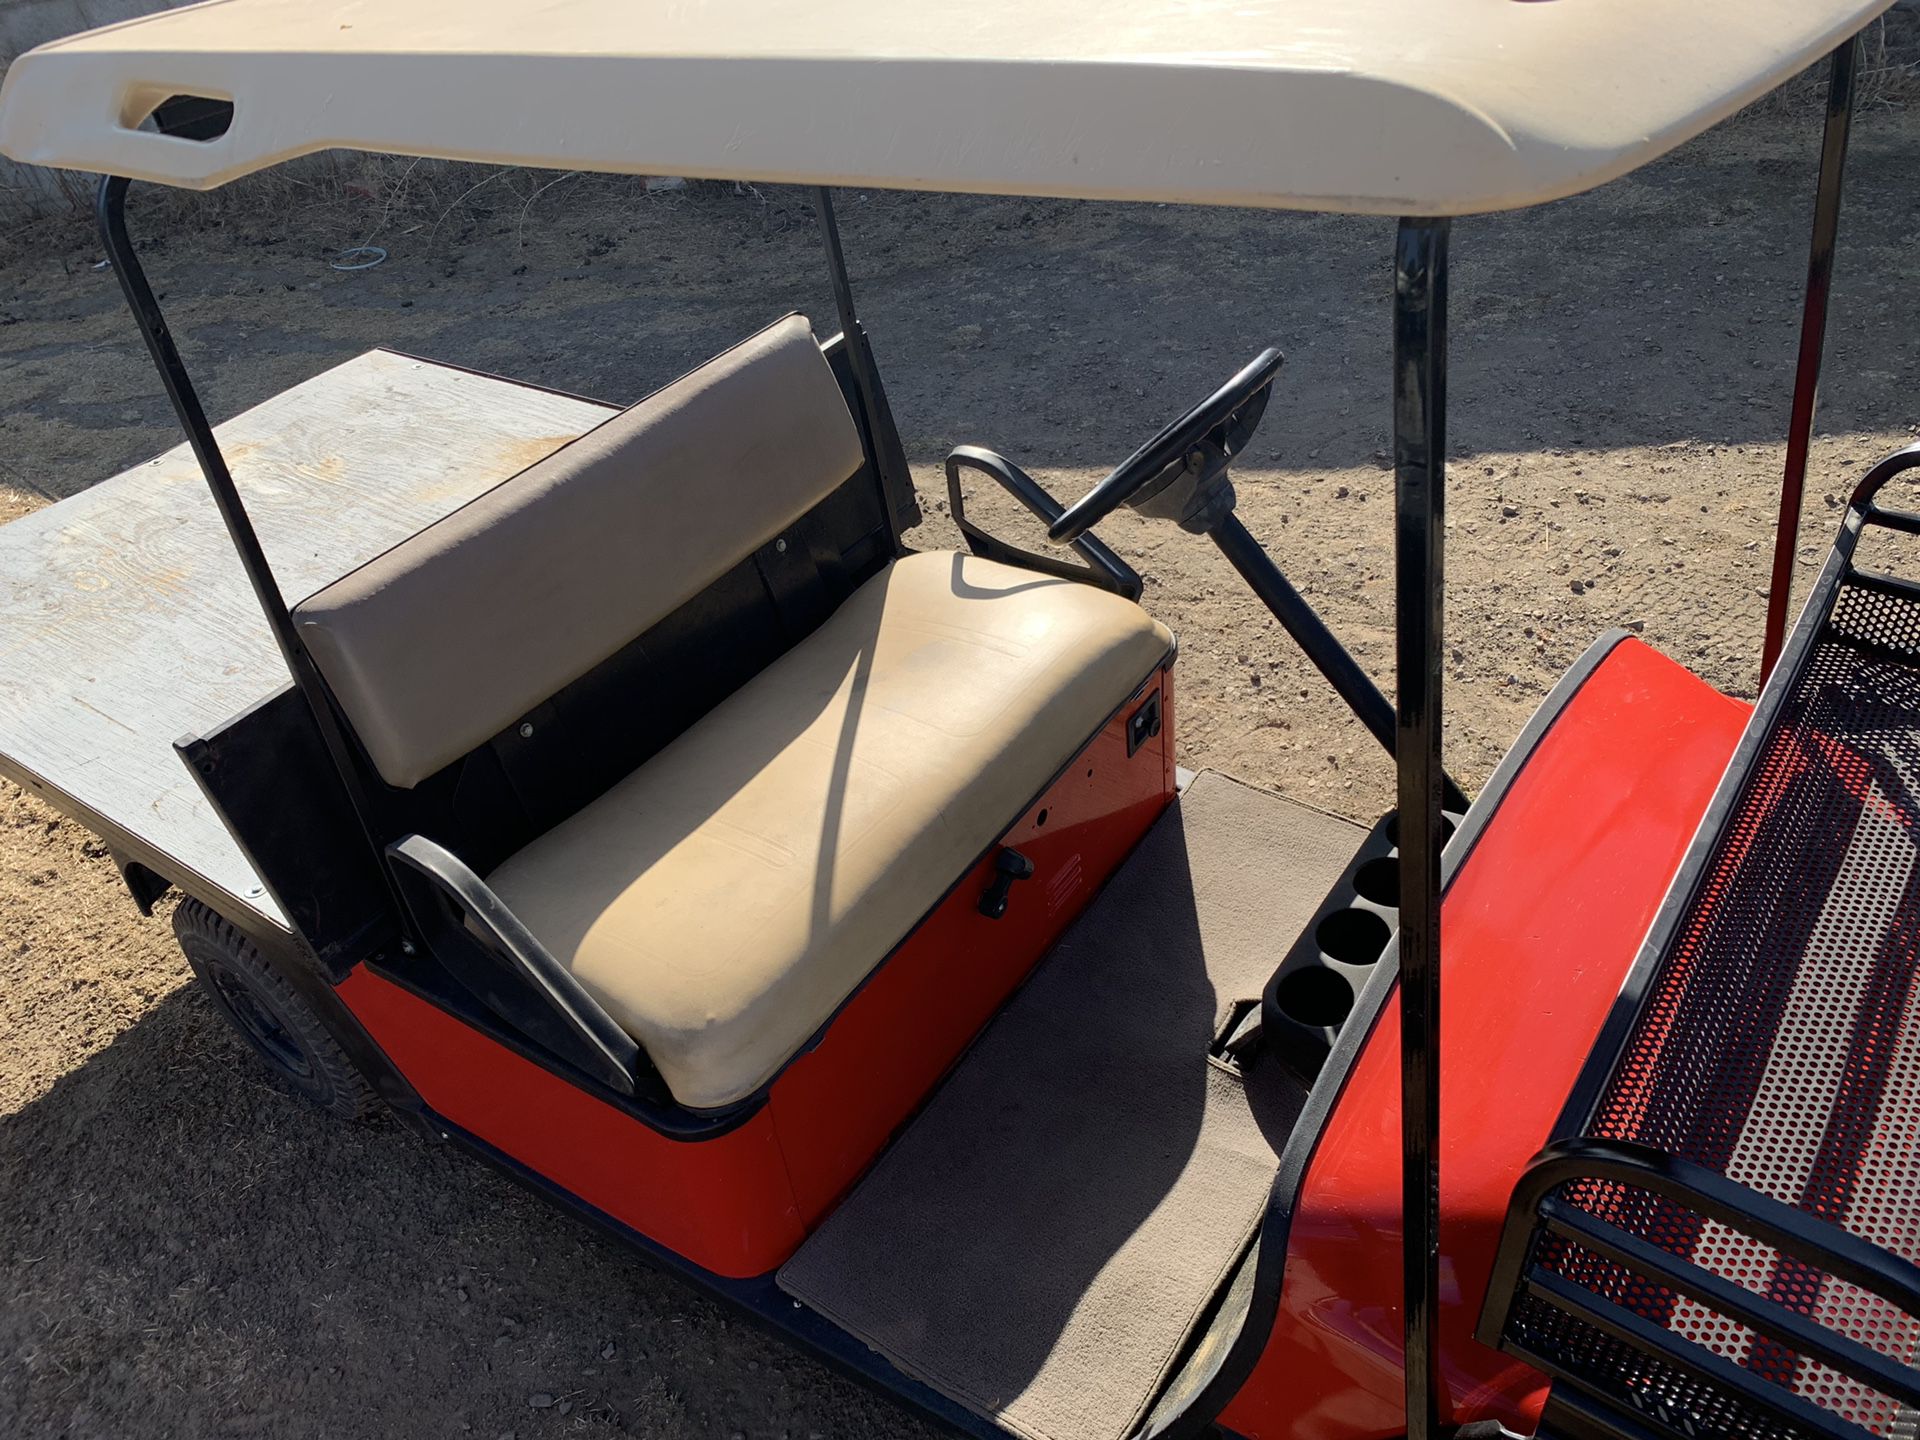 2 gas powered golf carts